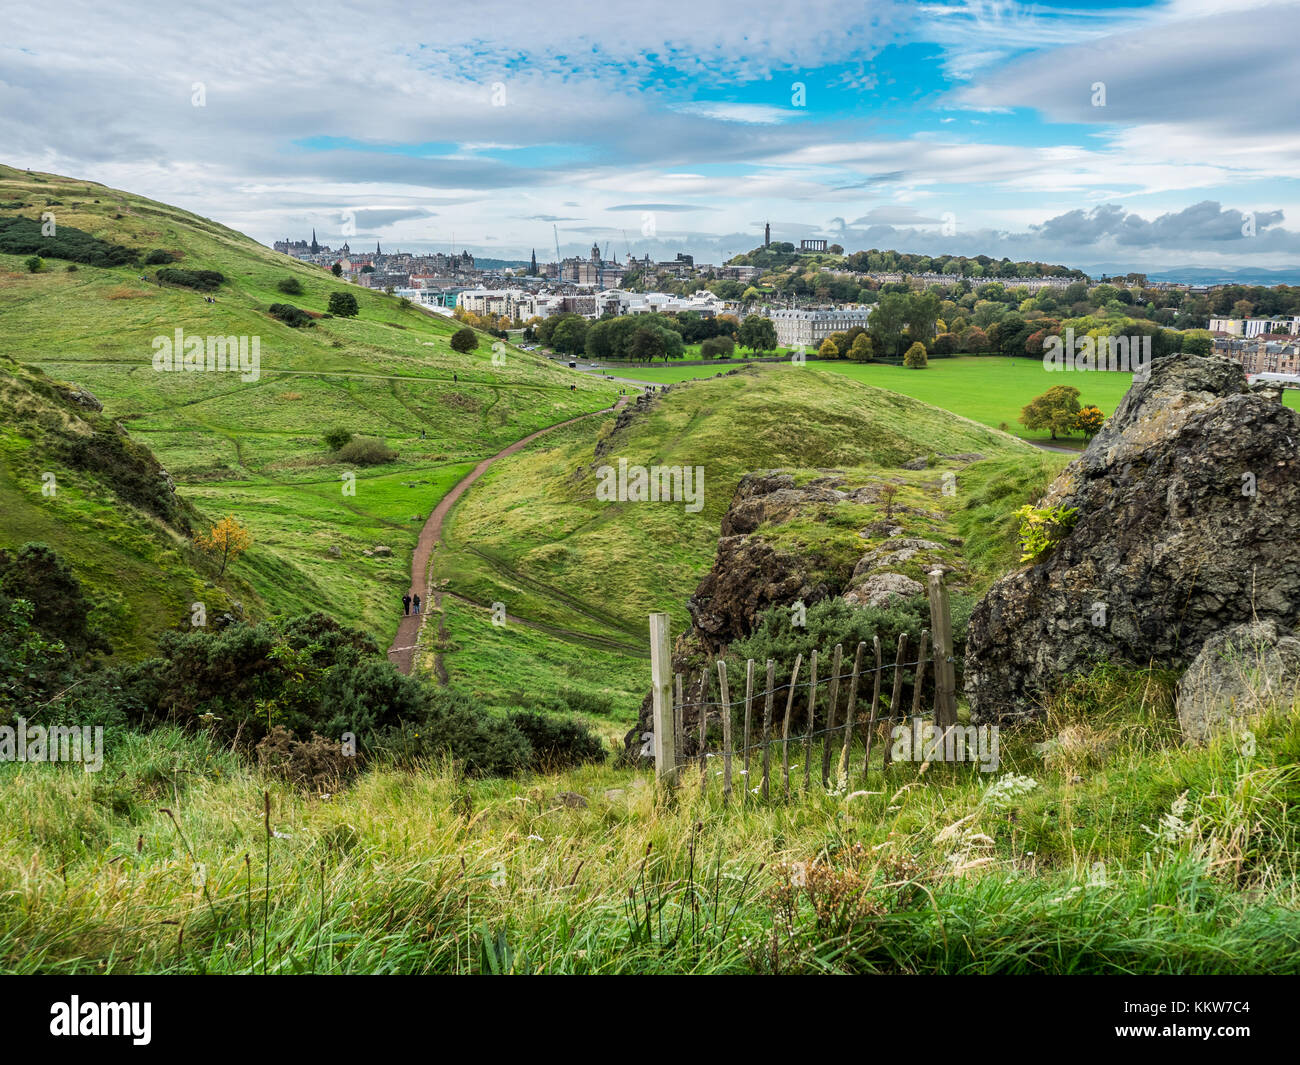 city of edinburgh with landscape Stock Photo